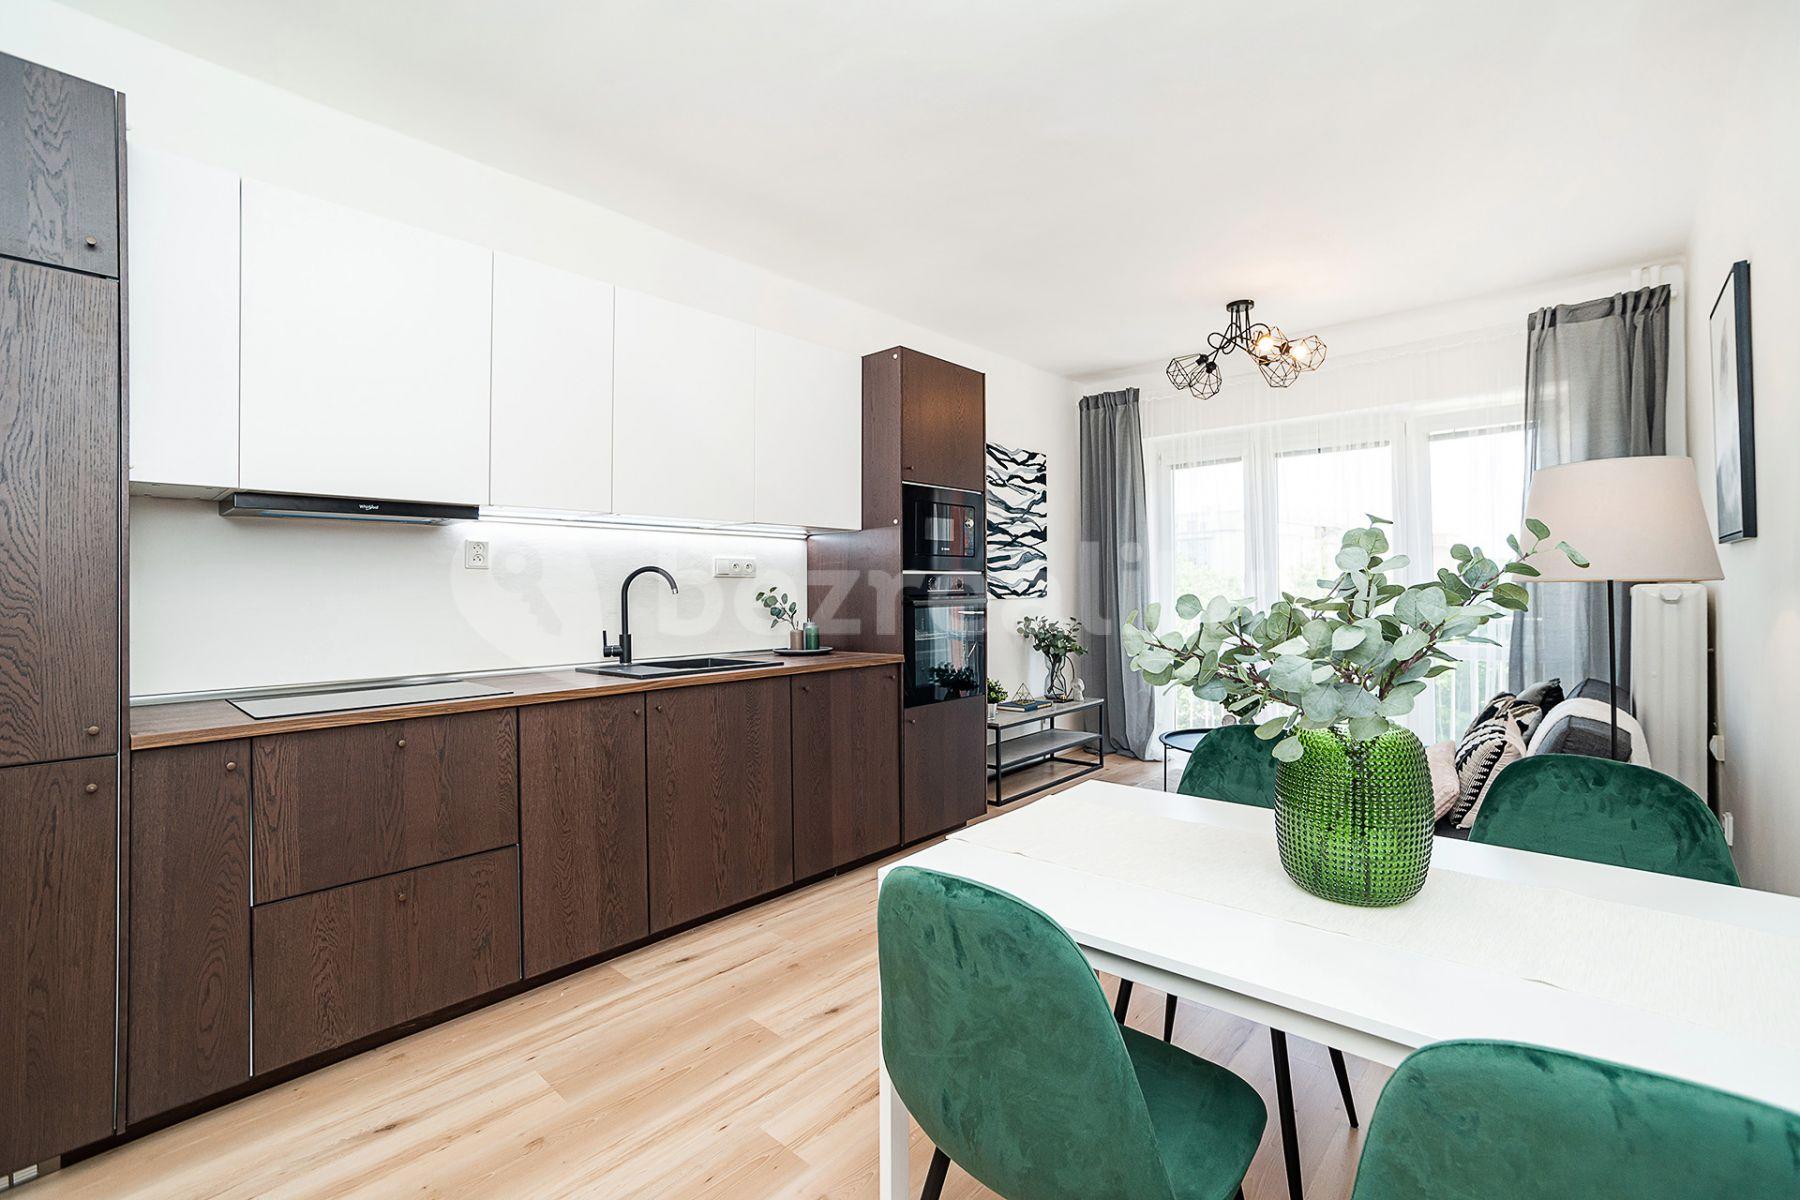 2 bedroom with open-plan kitchen flat for sale, 63 m², Prague, Prague